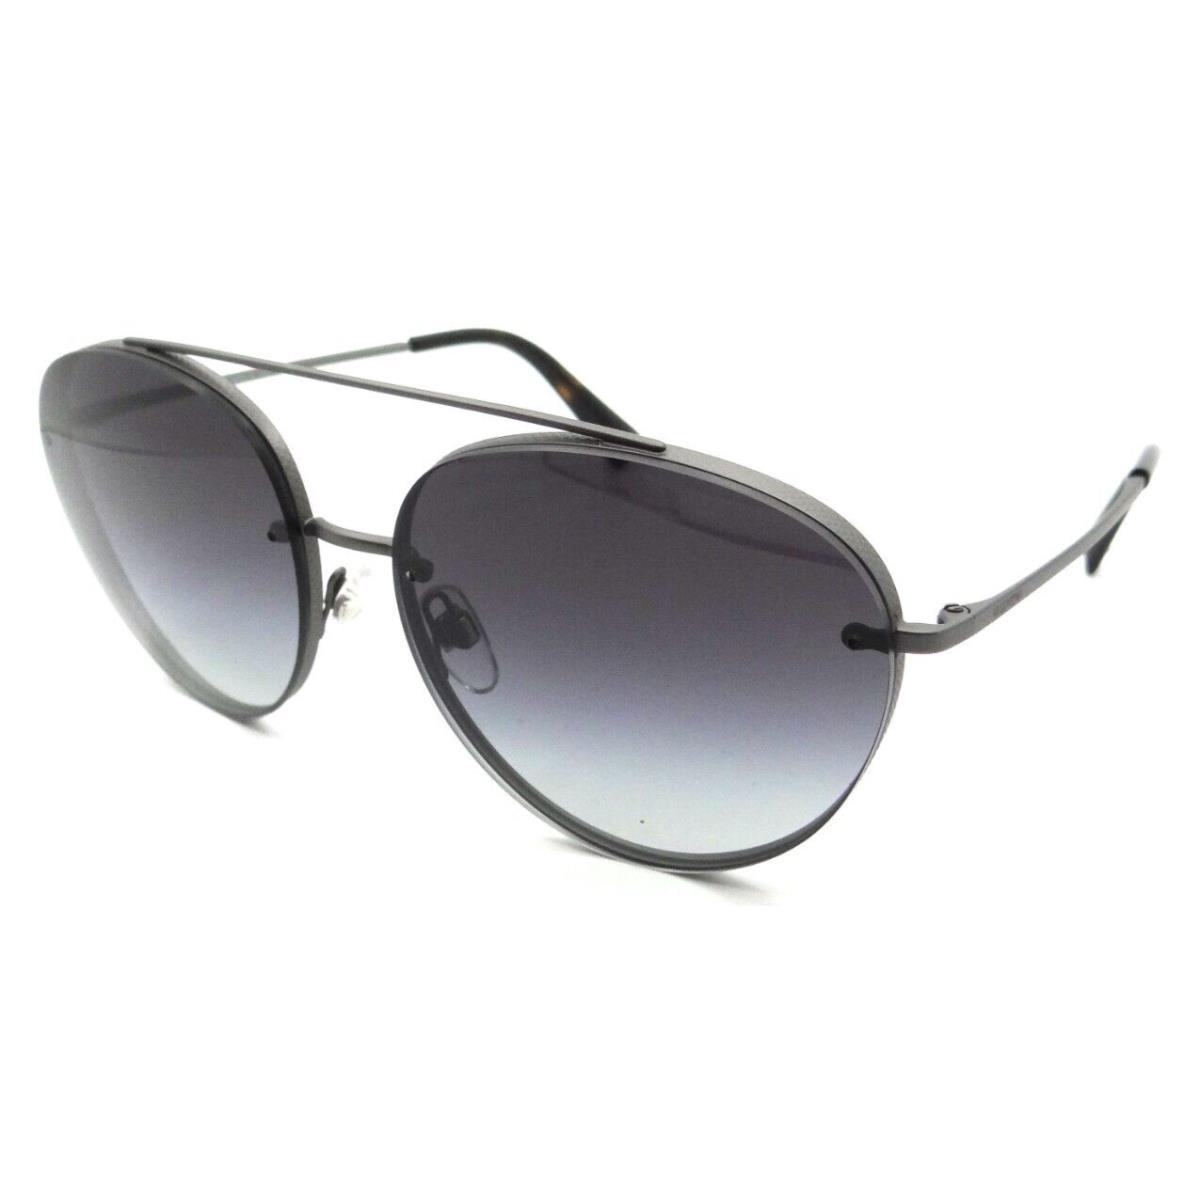 Valentino Sunglasses VA 2009 3017/8G 58-15-135 Matte Gunmetal / Grey Gradient